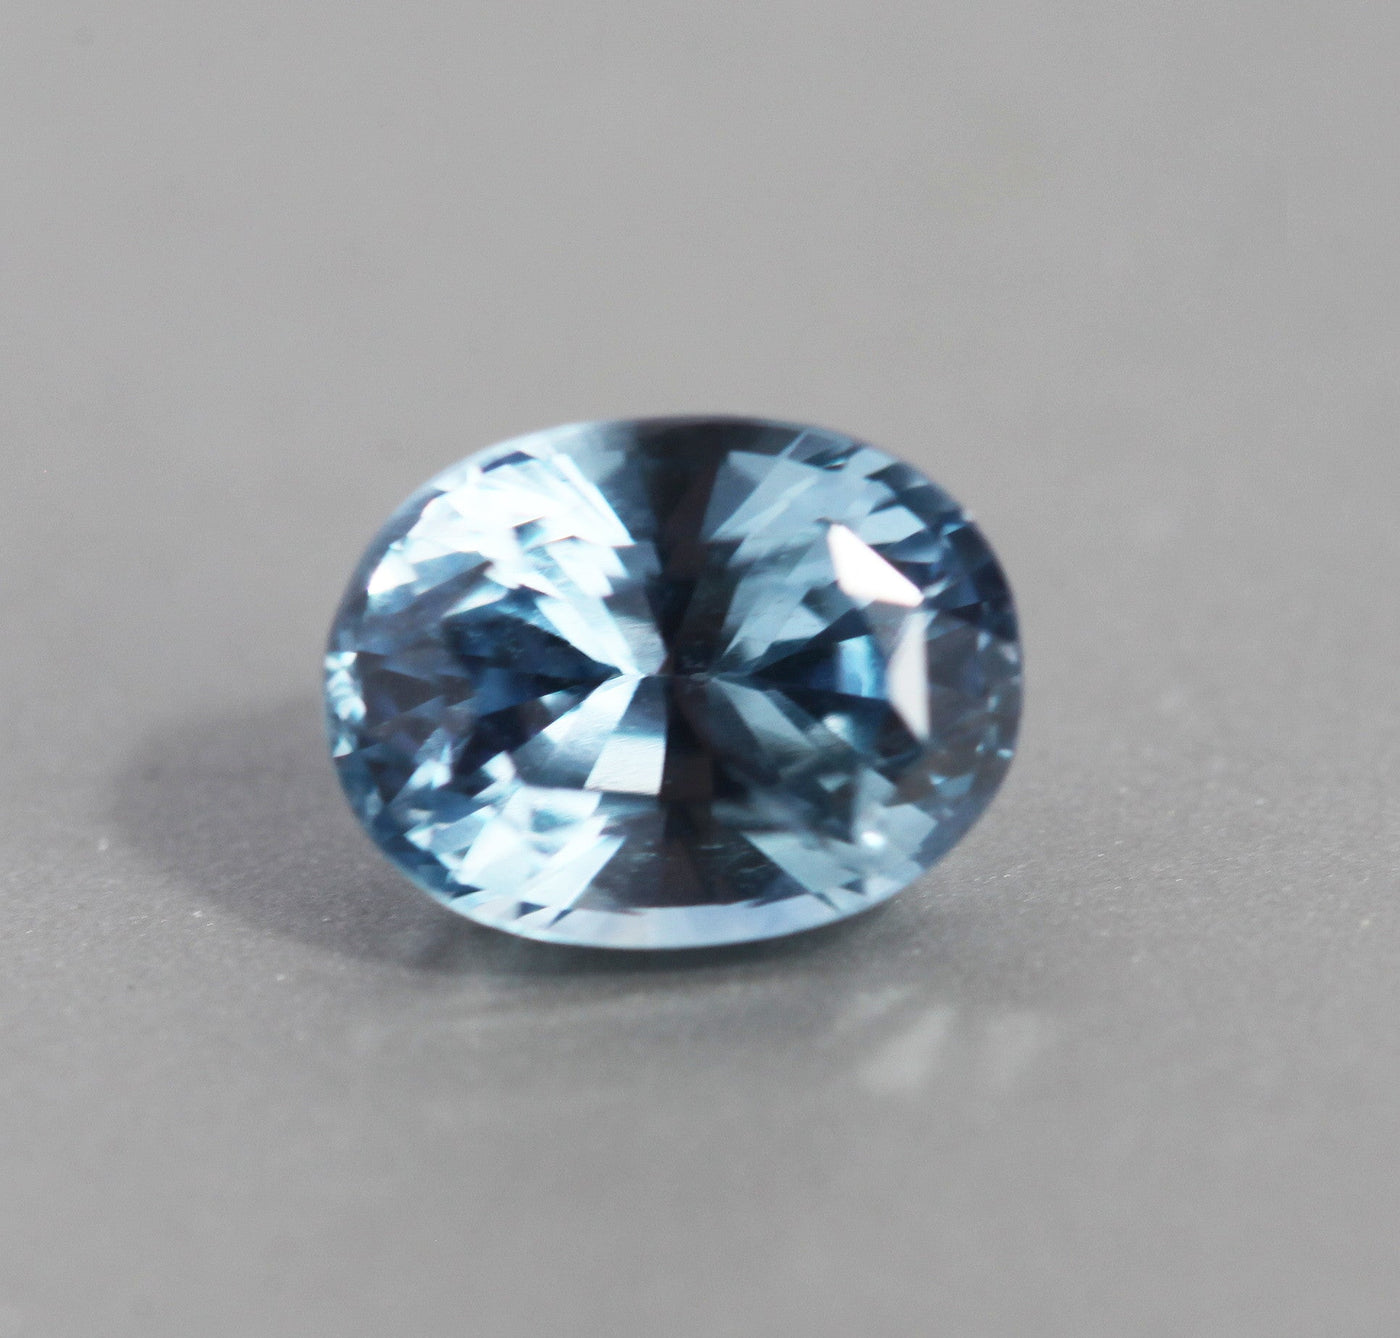 Loose oval-shaped aqua blue sapphire